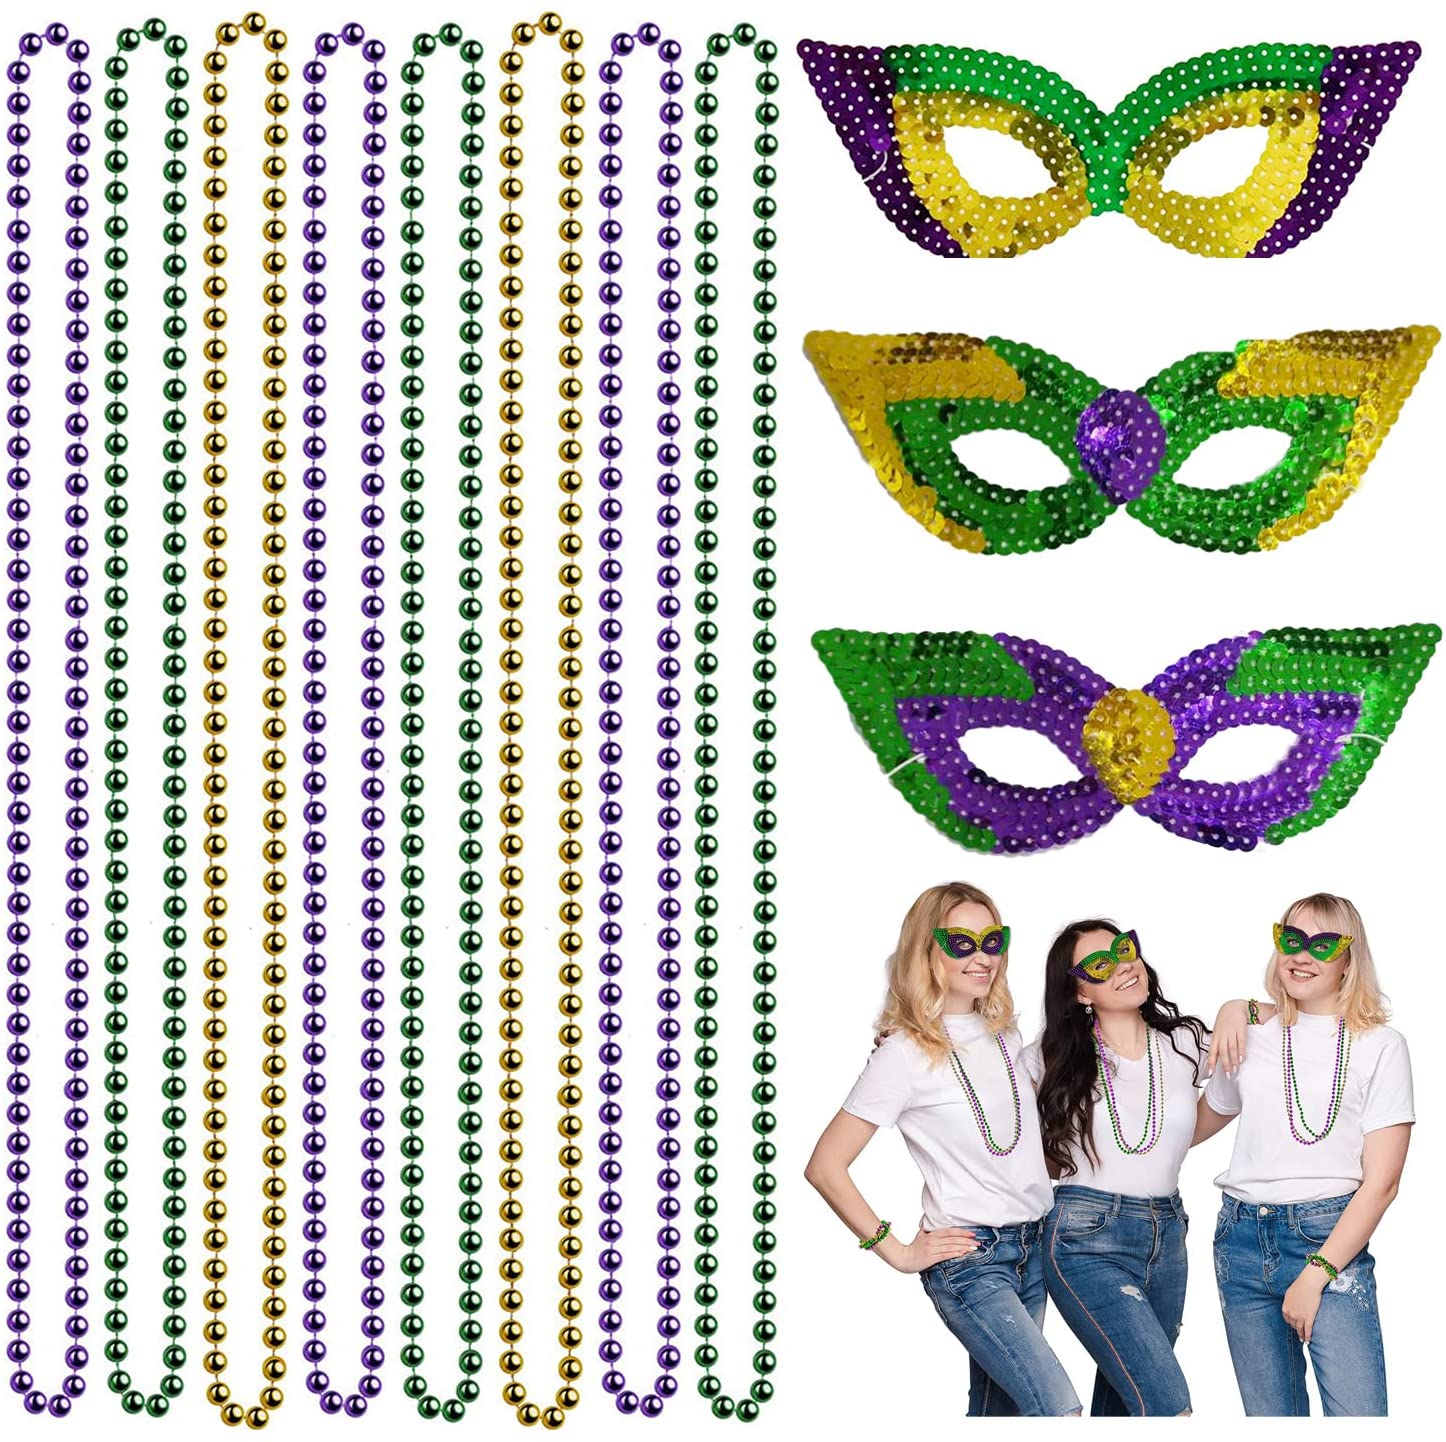 12 Pieces Mardi Gras Masks  Beads Necklaces Bulk Set - Mardi Gras Costume  Accessories Set Including Mardi Gras Necklaces and Mask for Carnival  Cosplay Party - Walmart.com